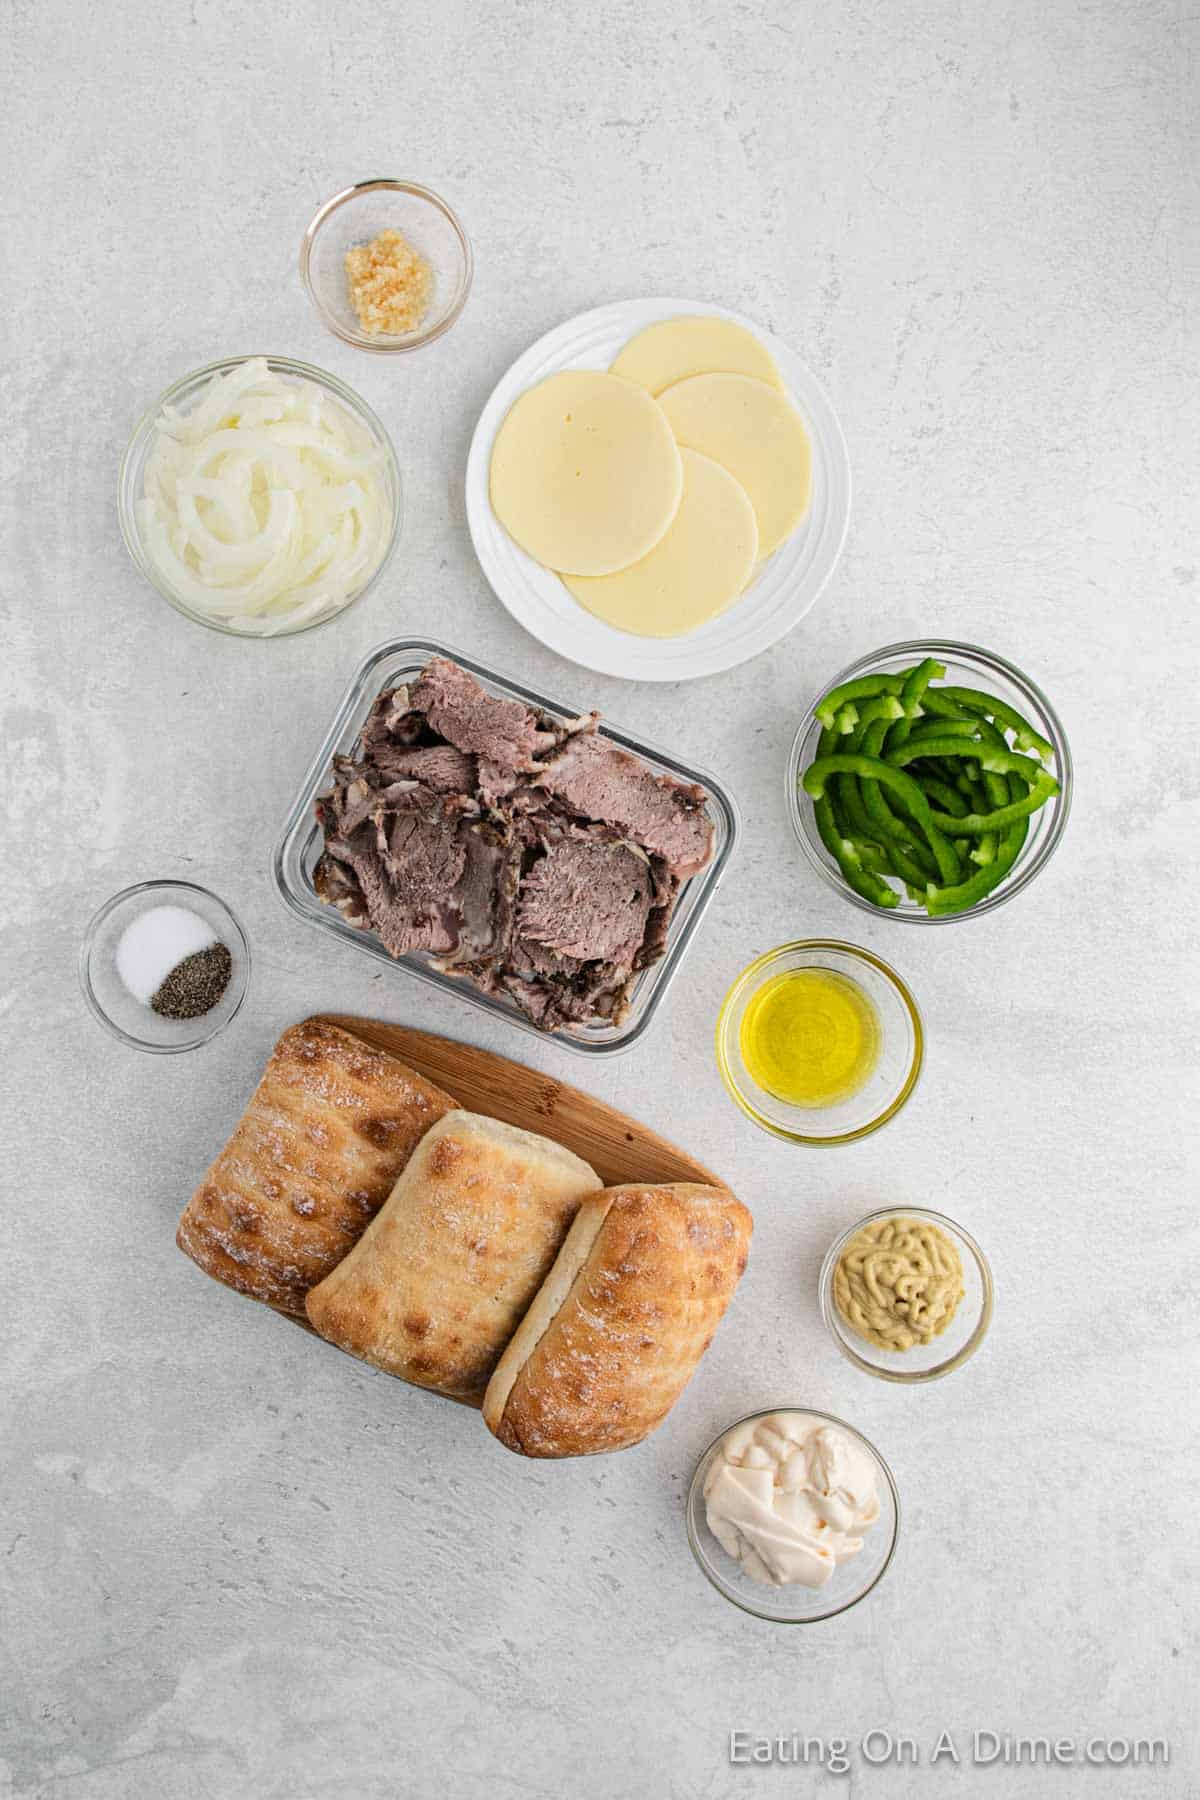 Prime Rib Sandwiches Ingredients - mayonnaise, dijon mustard, garlic, olive oil, onion, green bell pepper, prime rib, salt, pepper, bread, provolone cheese